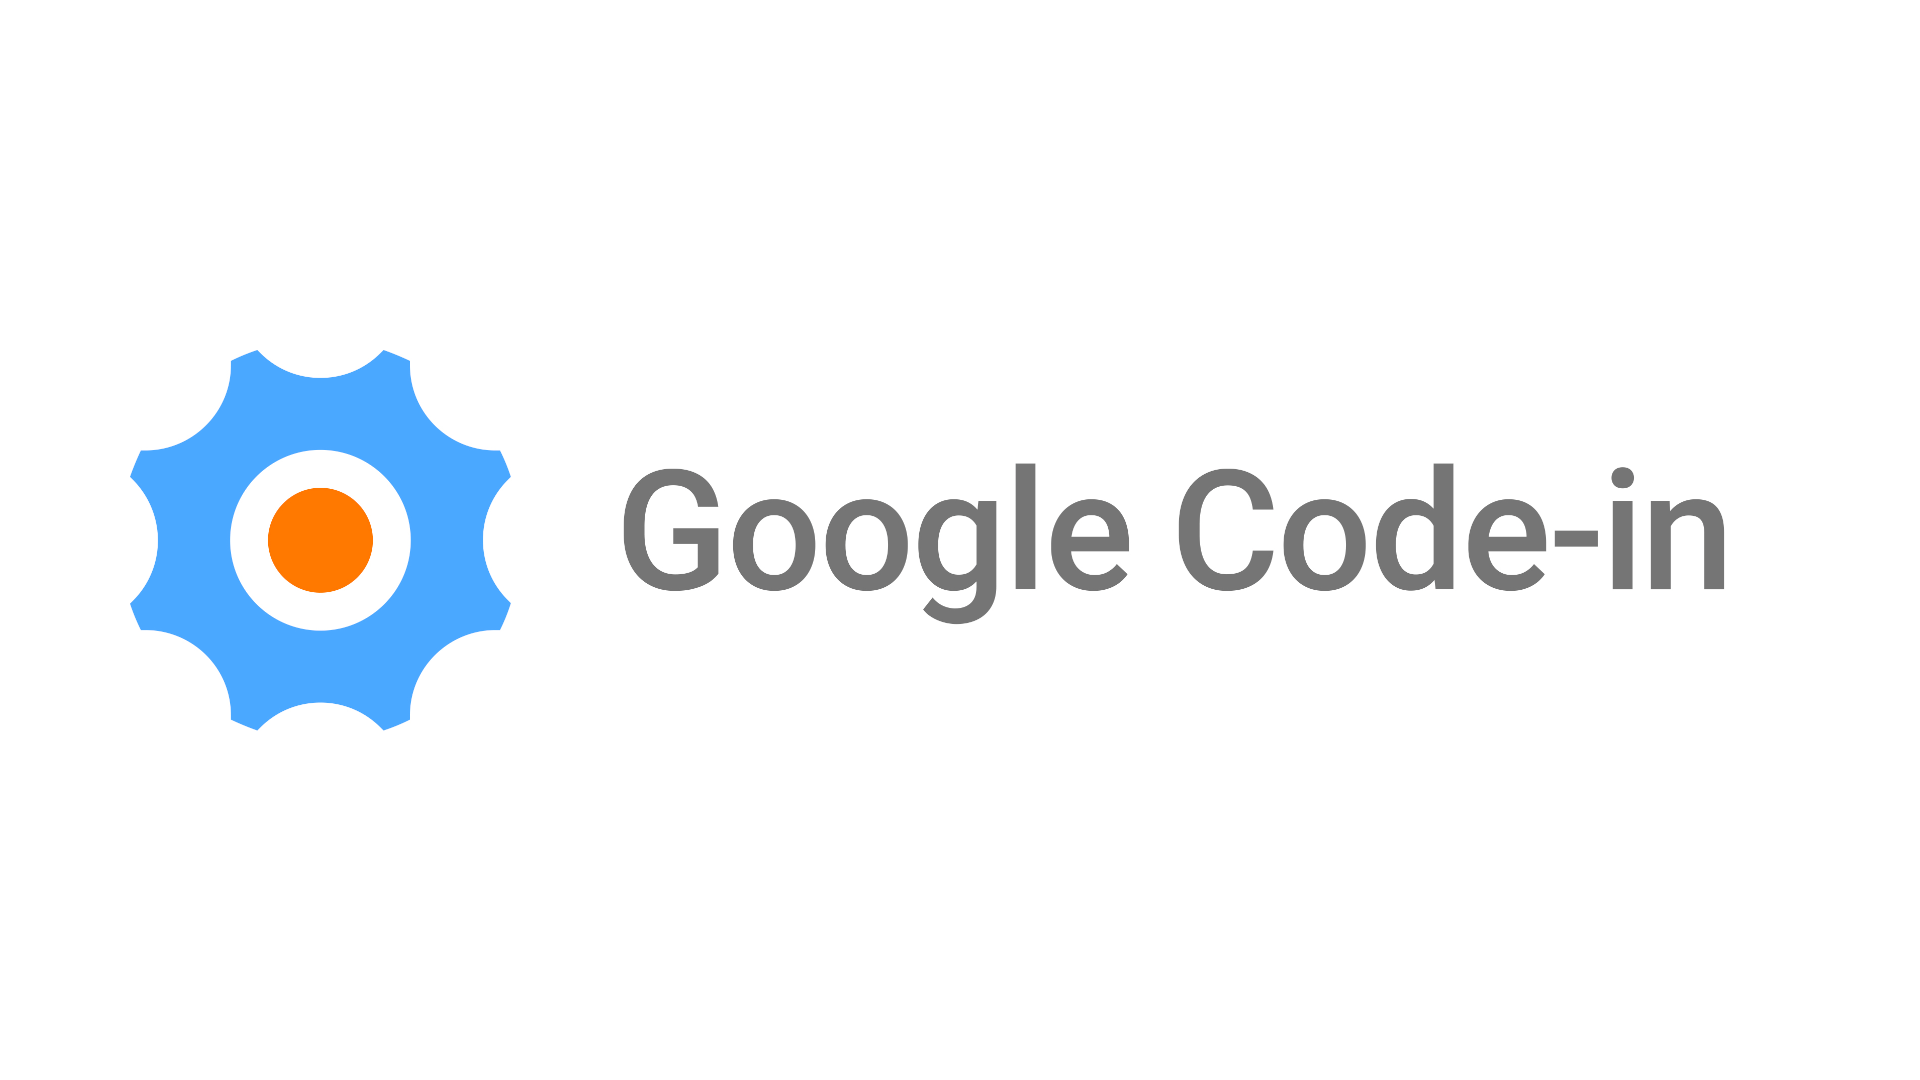 Google Code-in